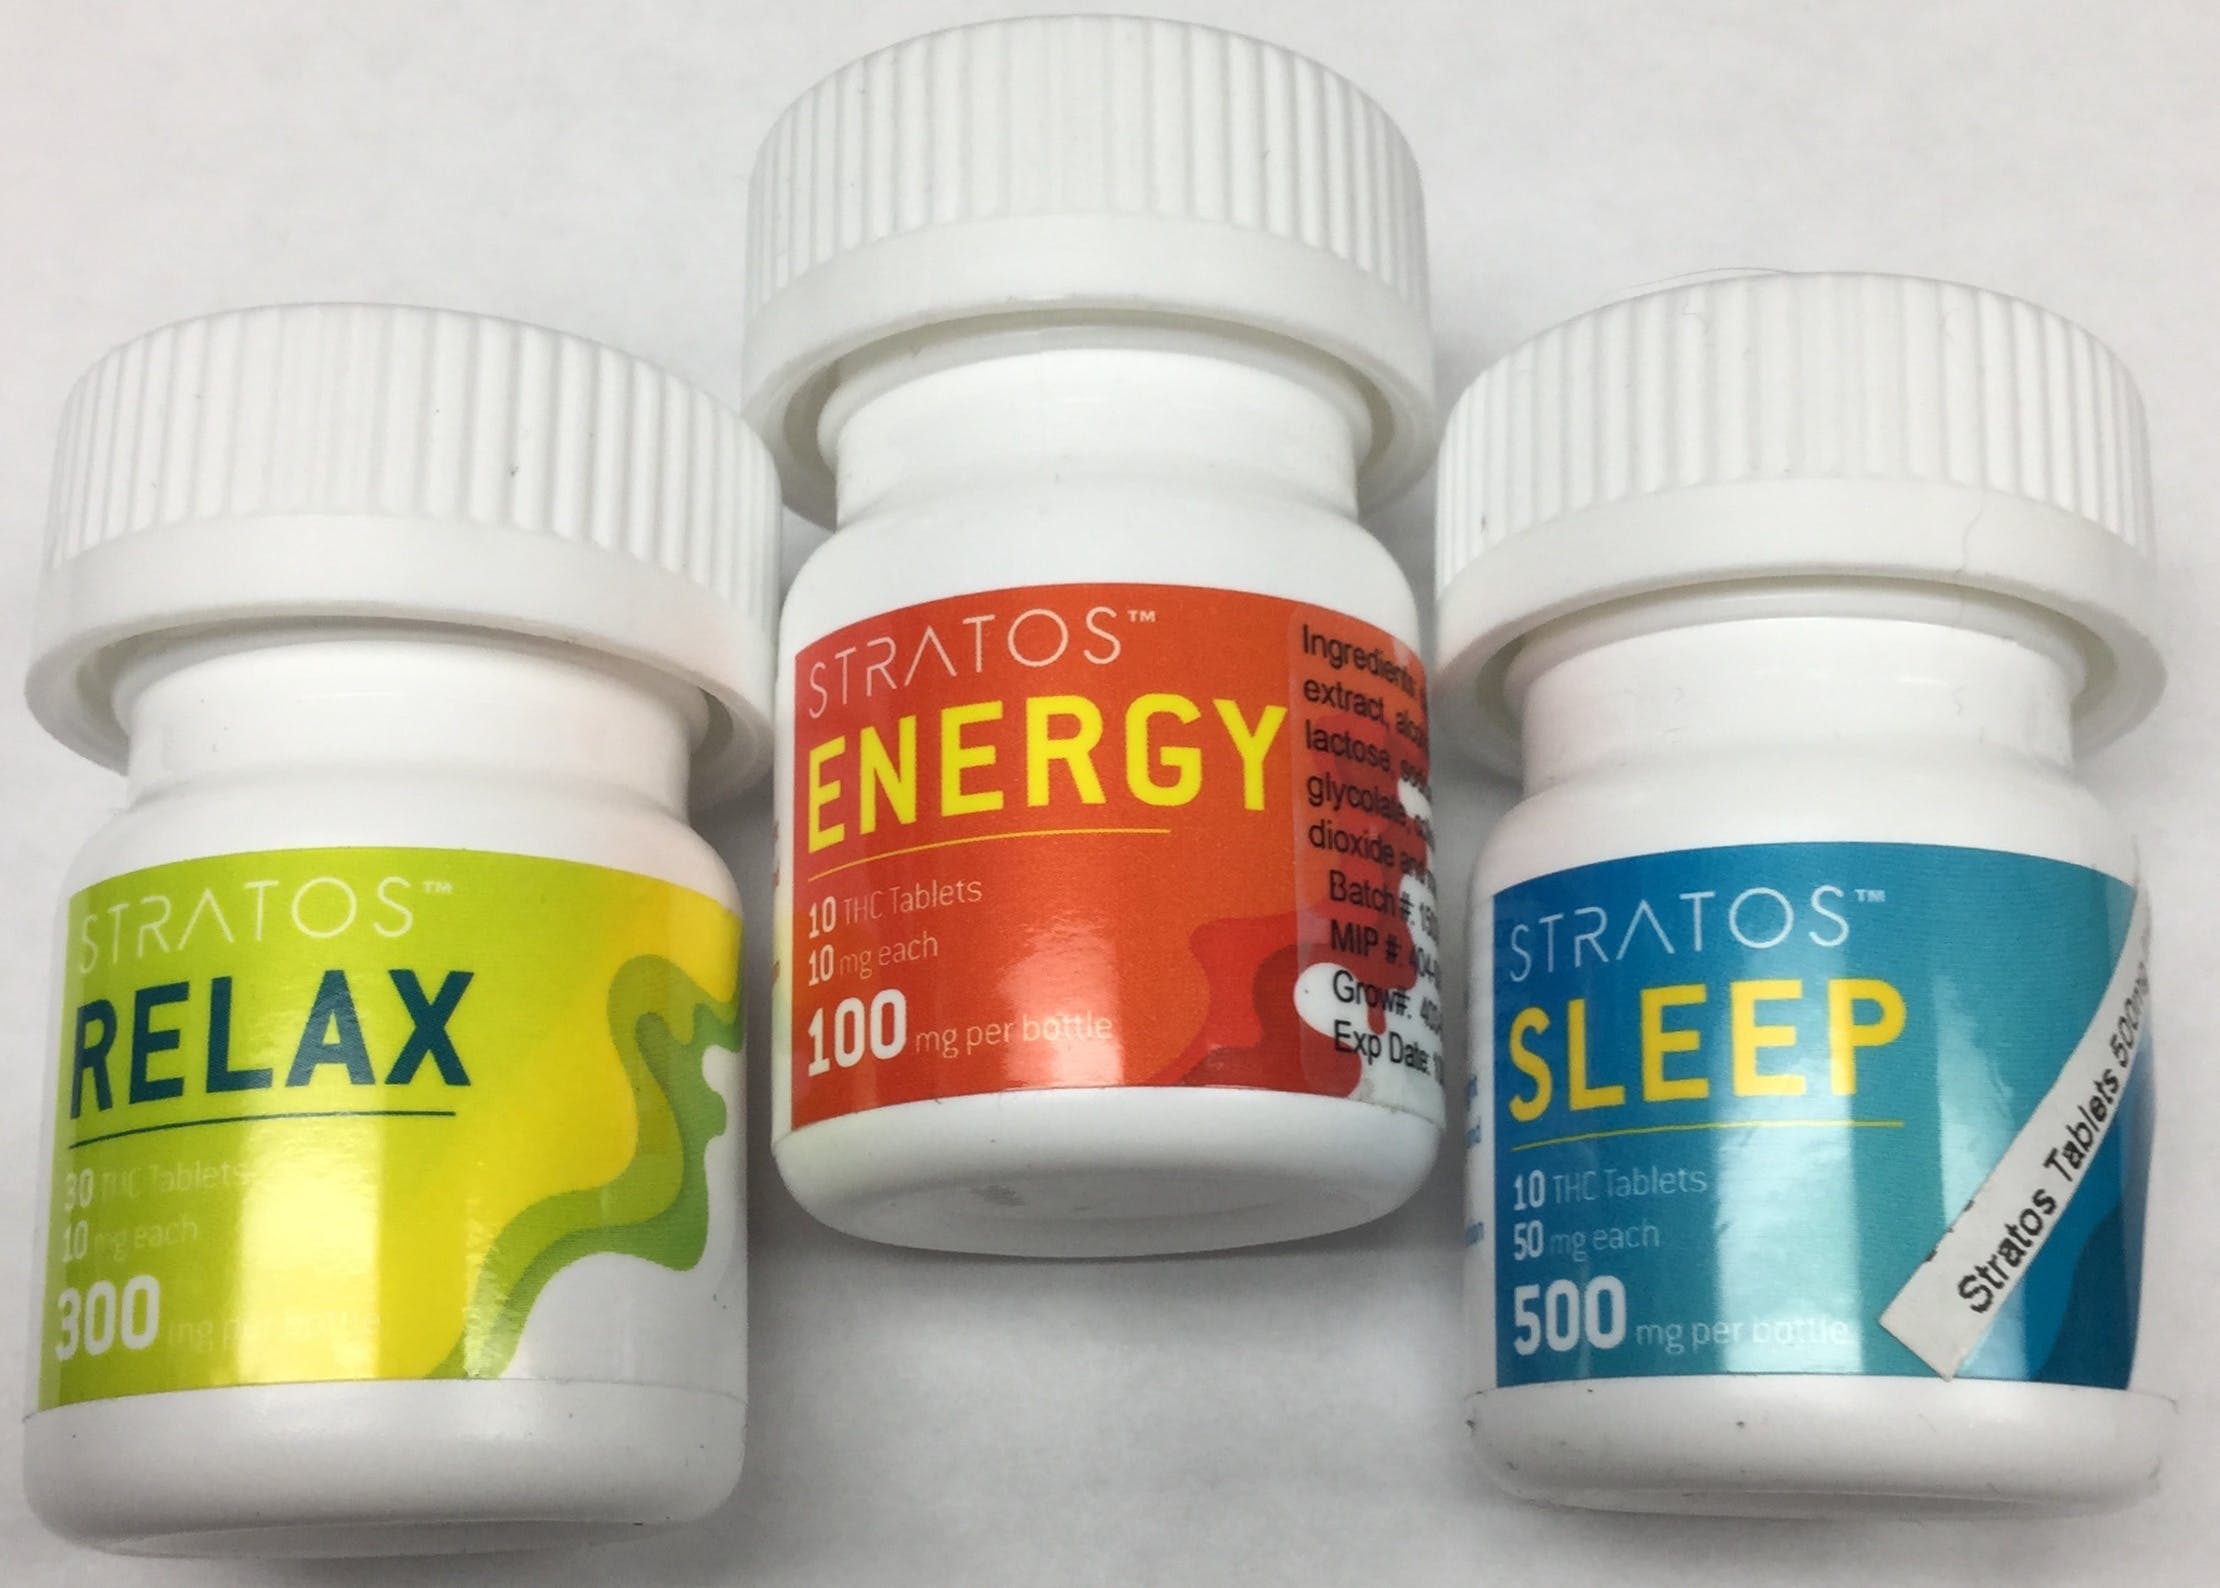 Stratos - 500 mg Tablets